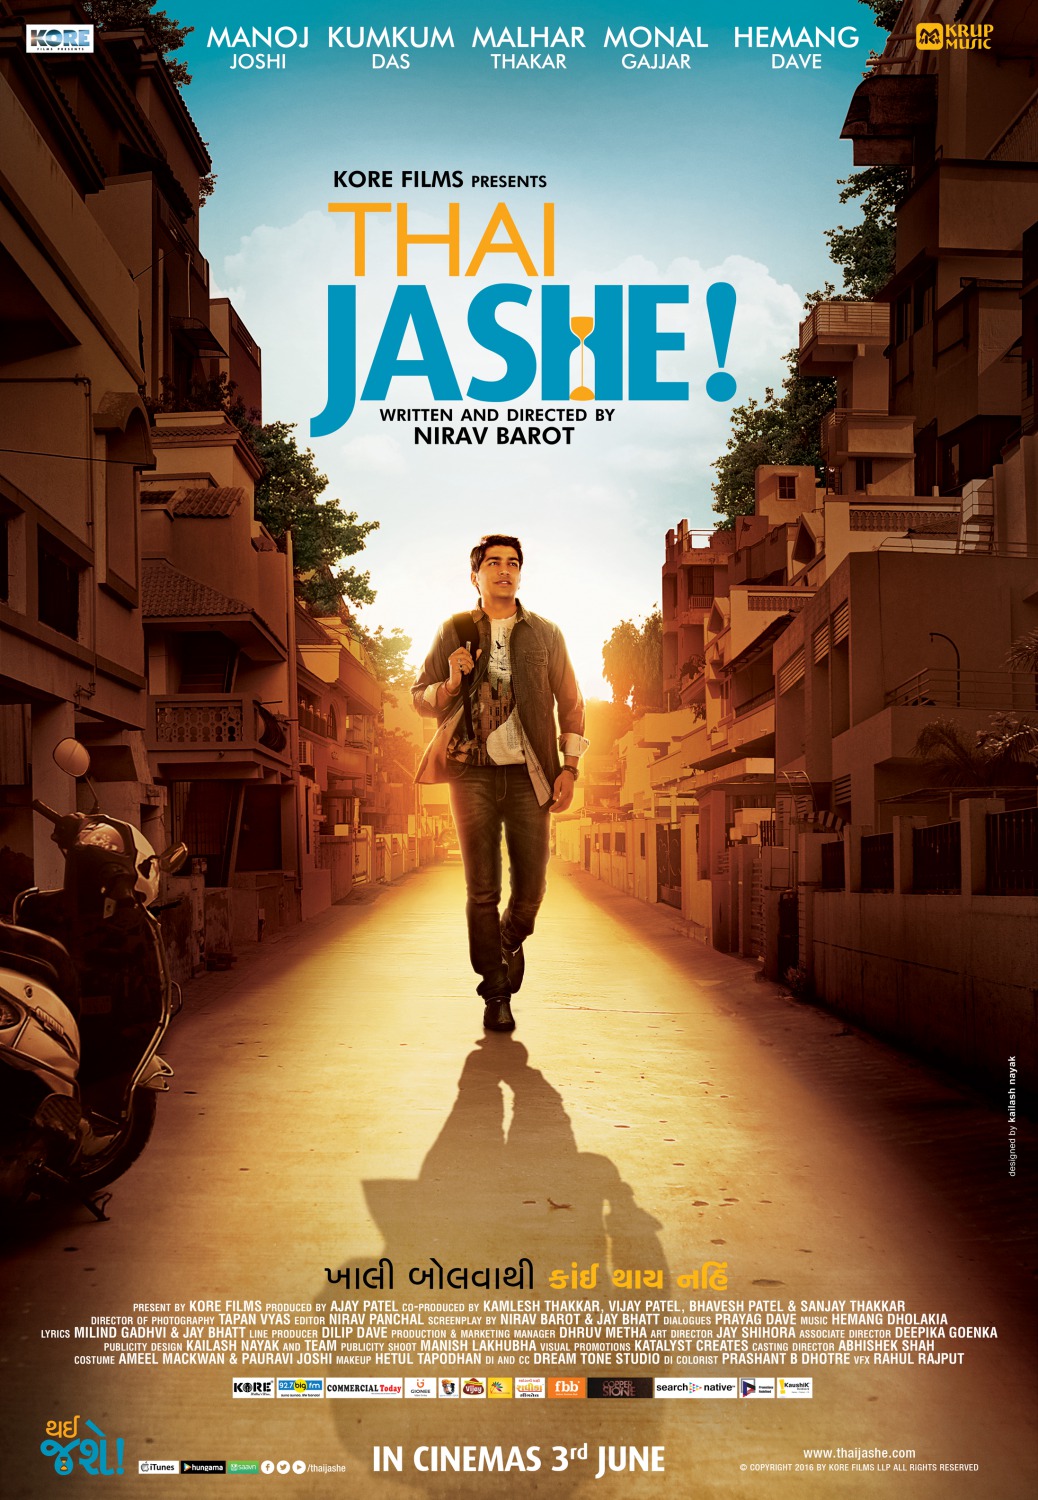 Extra Large Movie Poster Image for Thai Jashe! (#2 of 5)